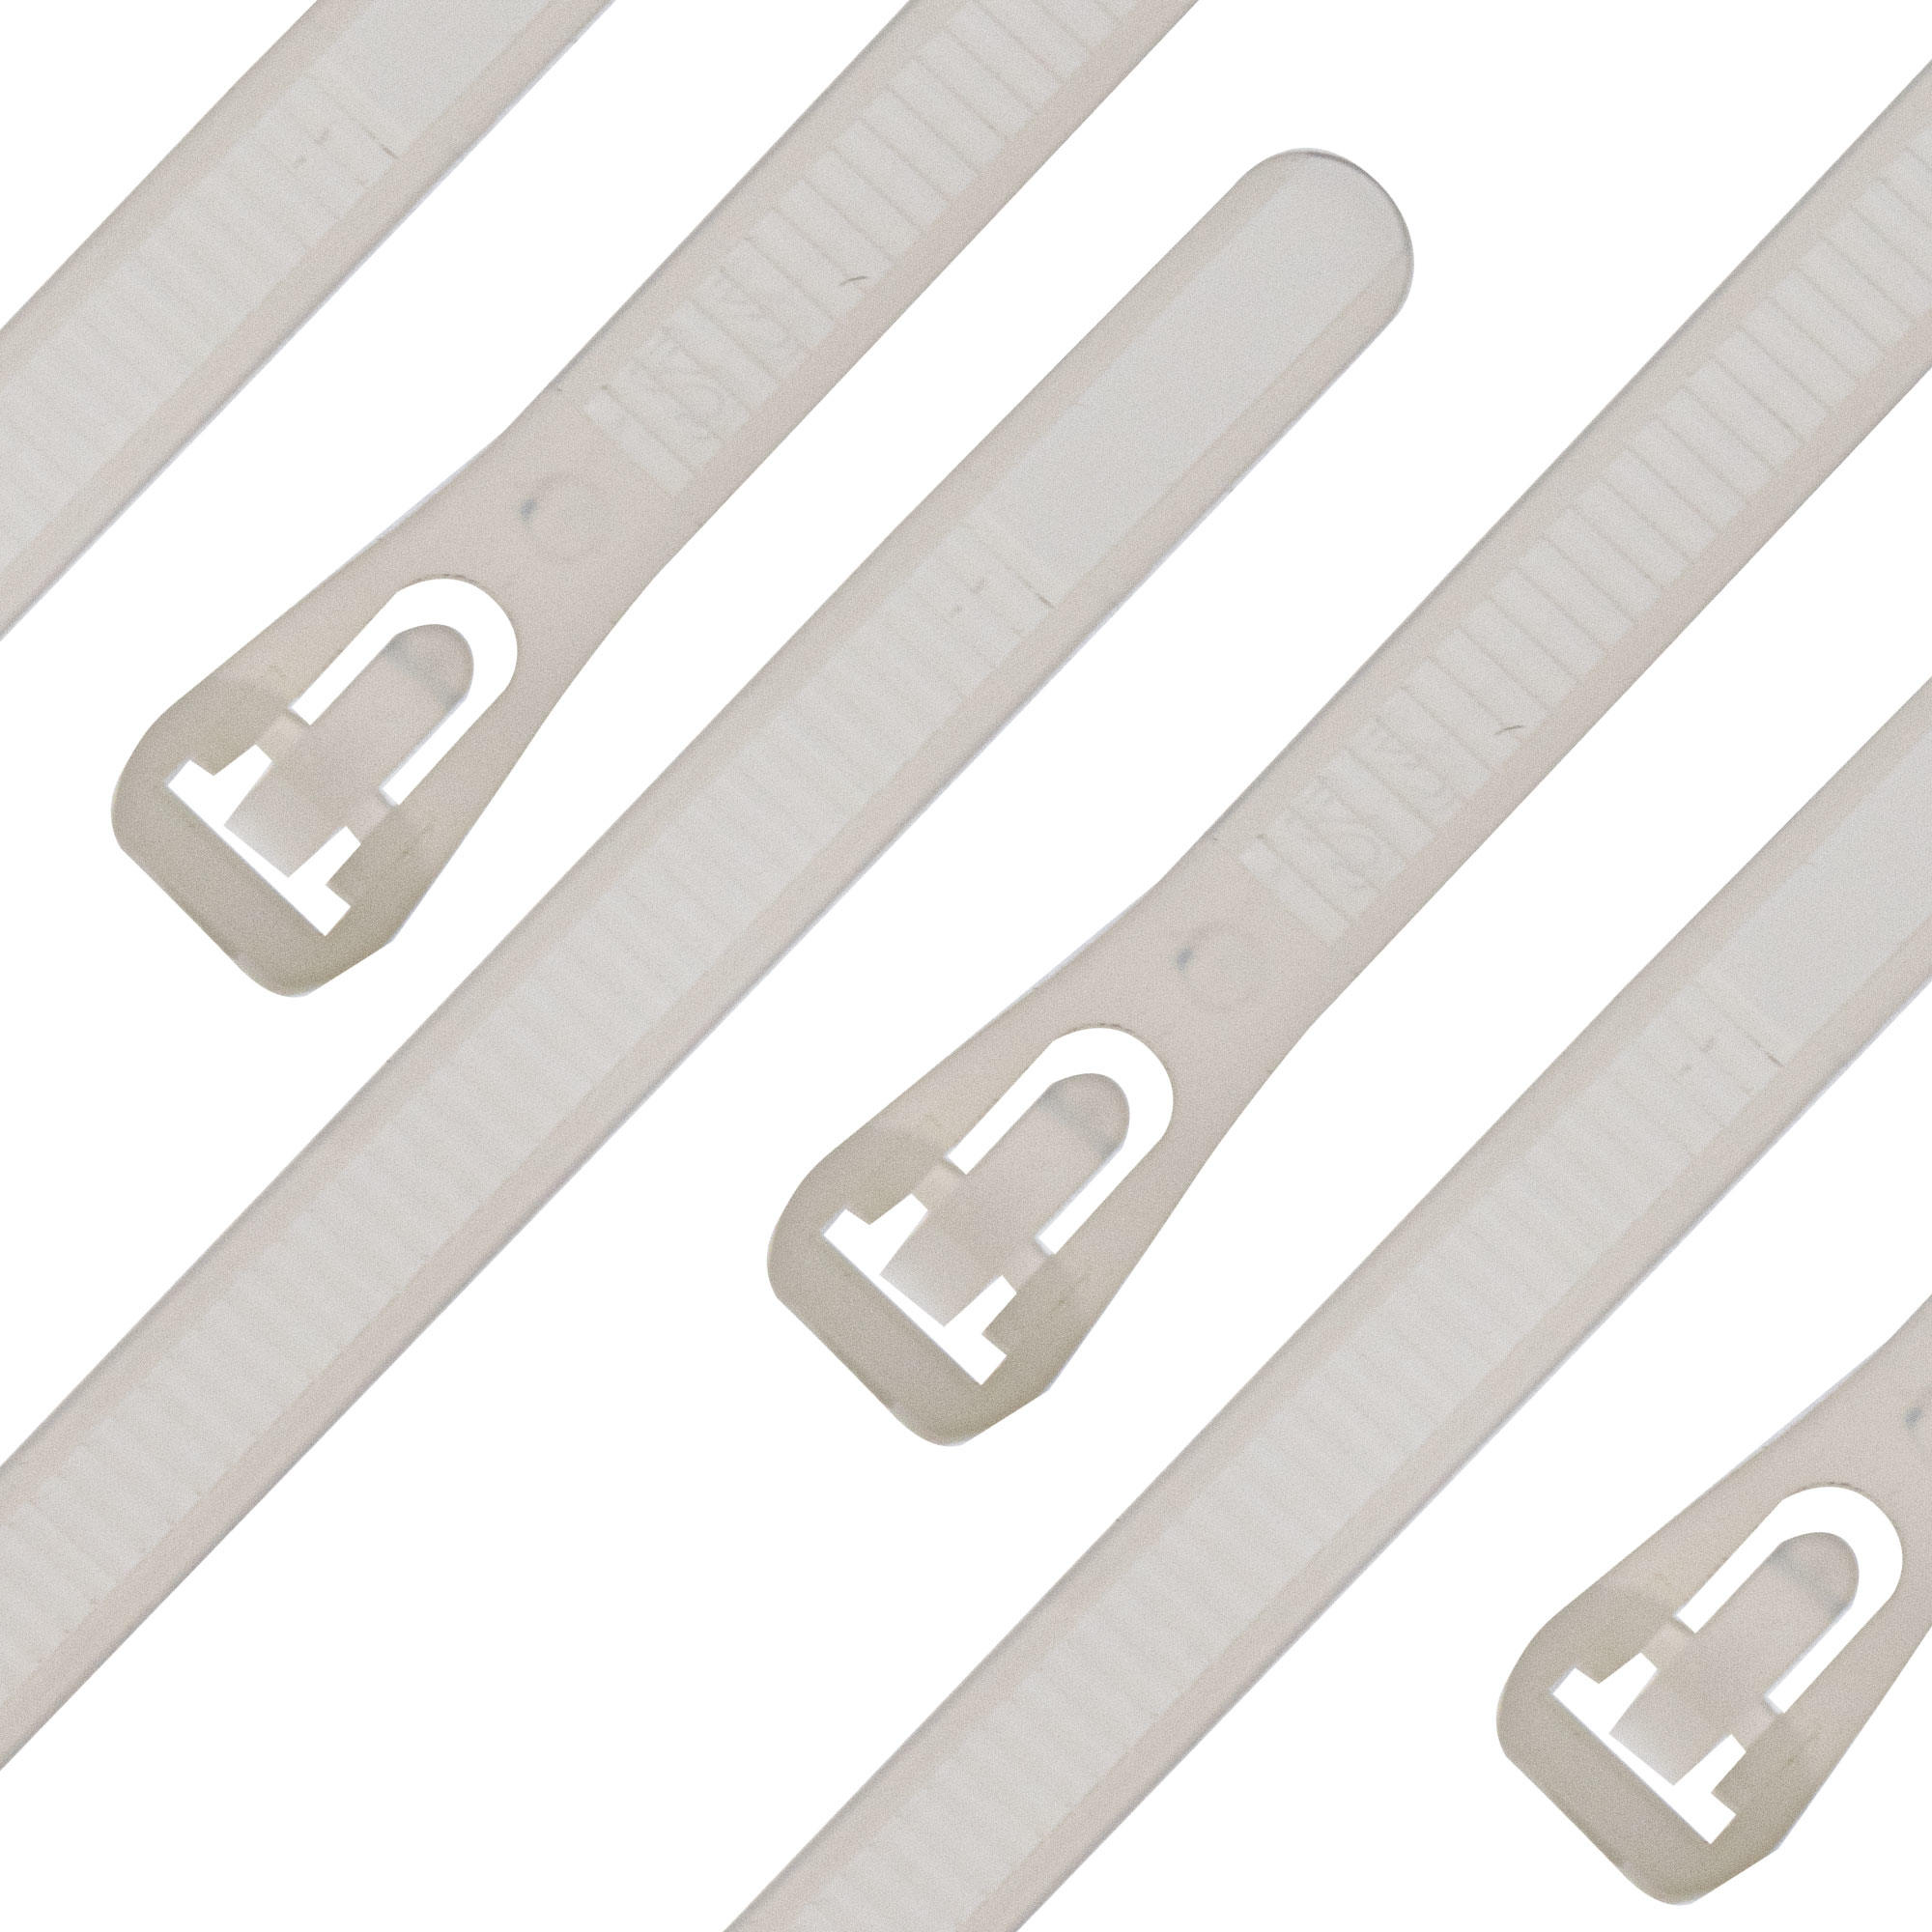 Cable tie releasable 200 x 7,6mm, white, 100PCS